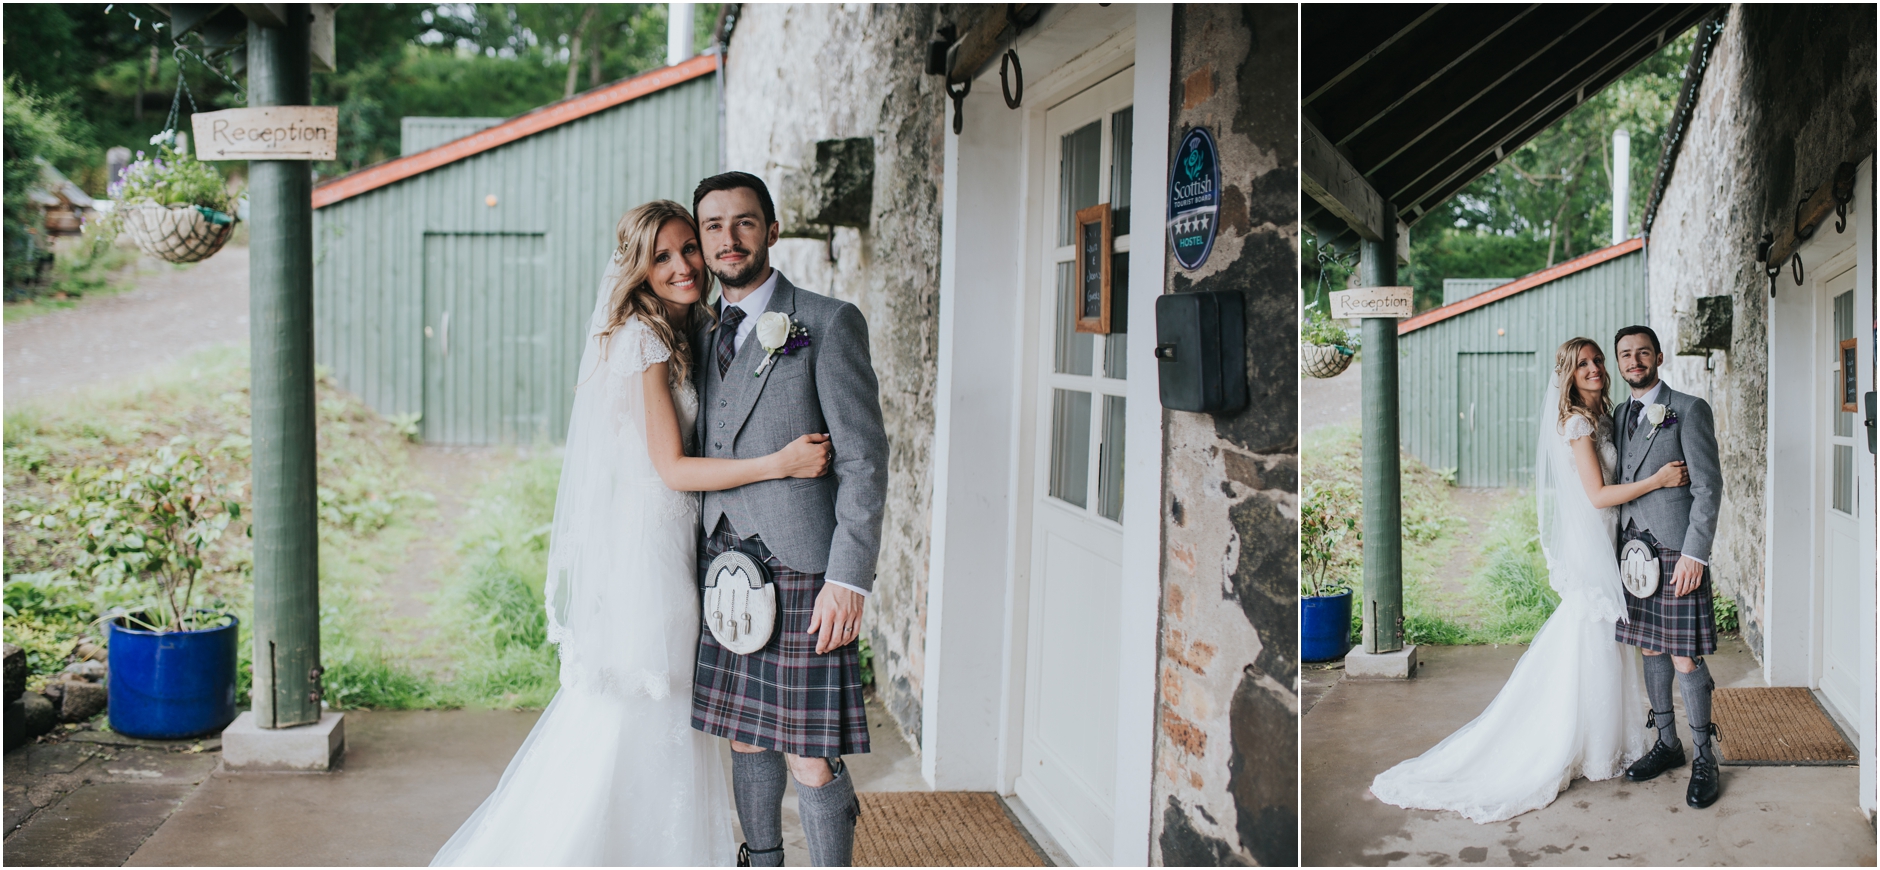 comrie croft barn wedding photos